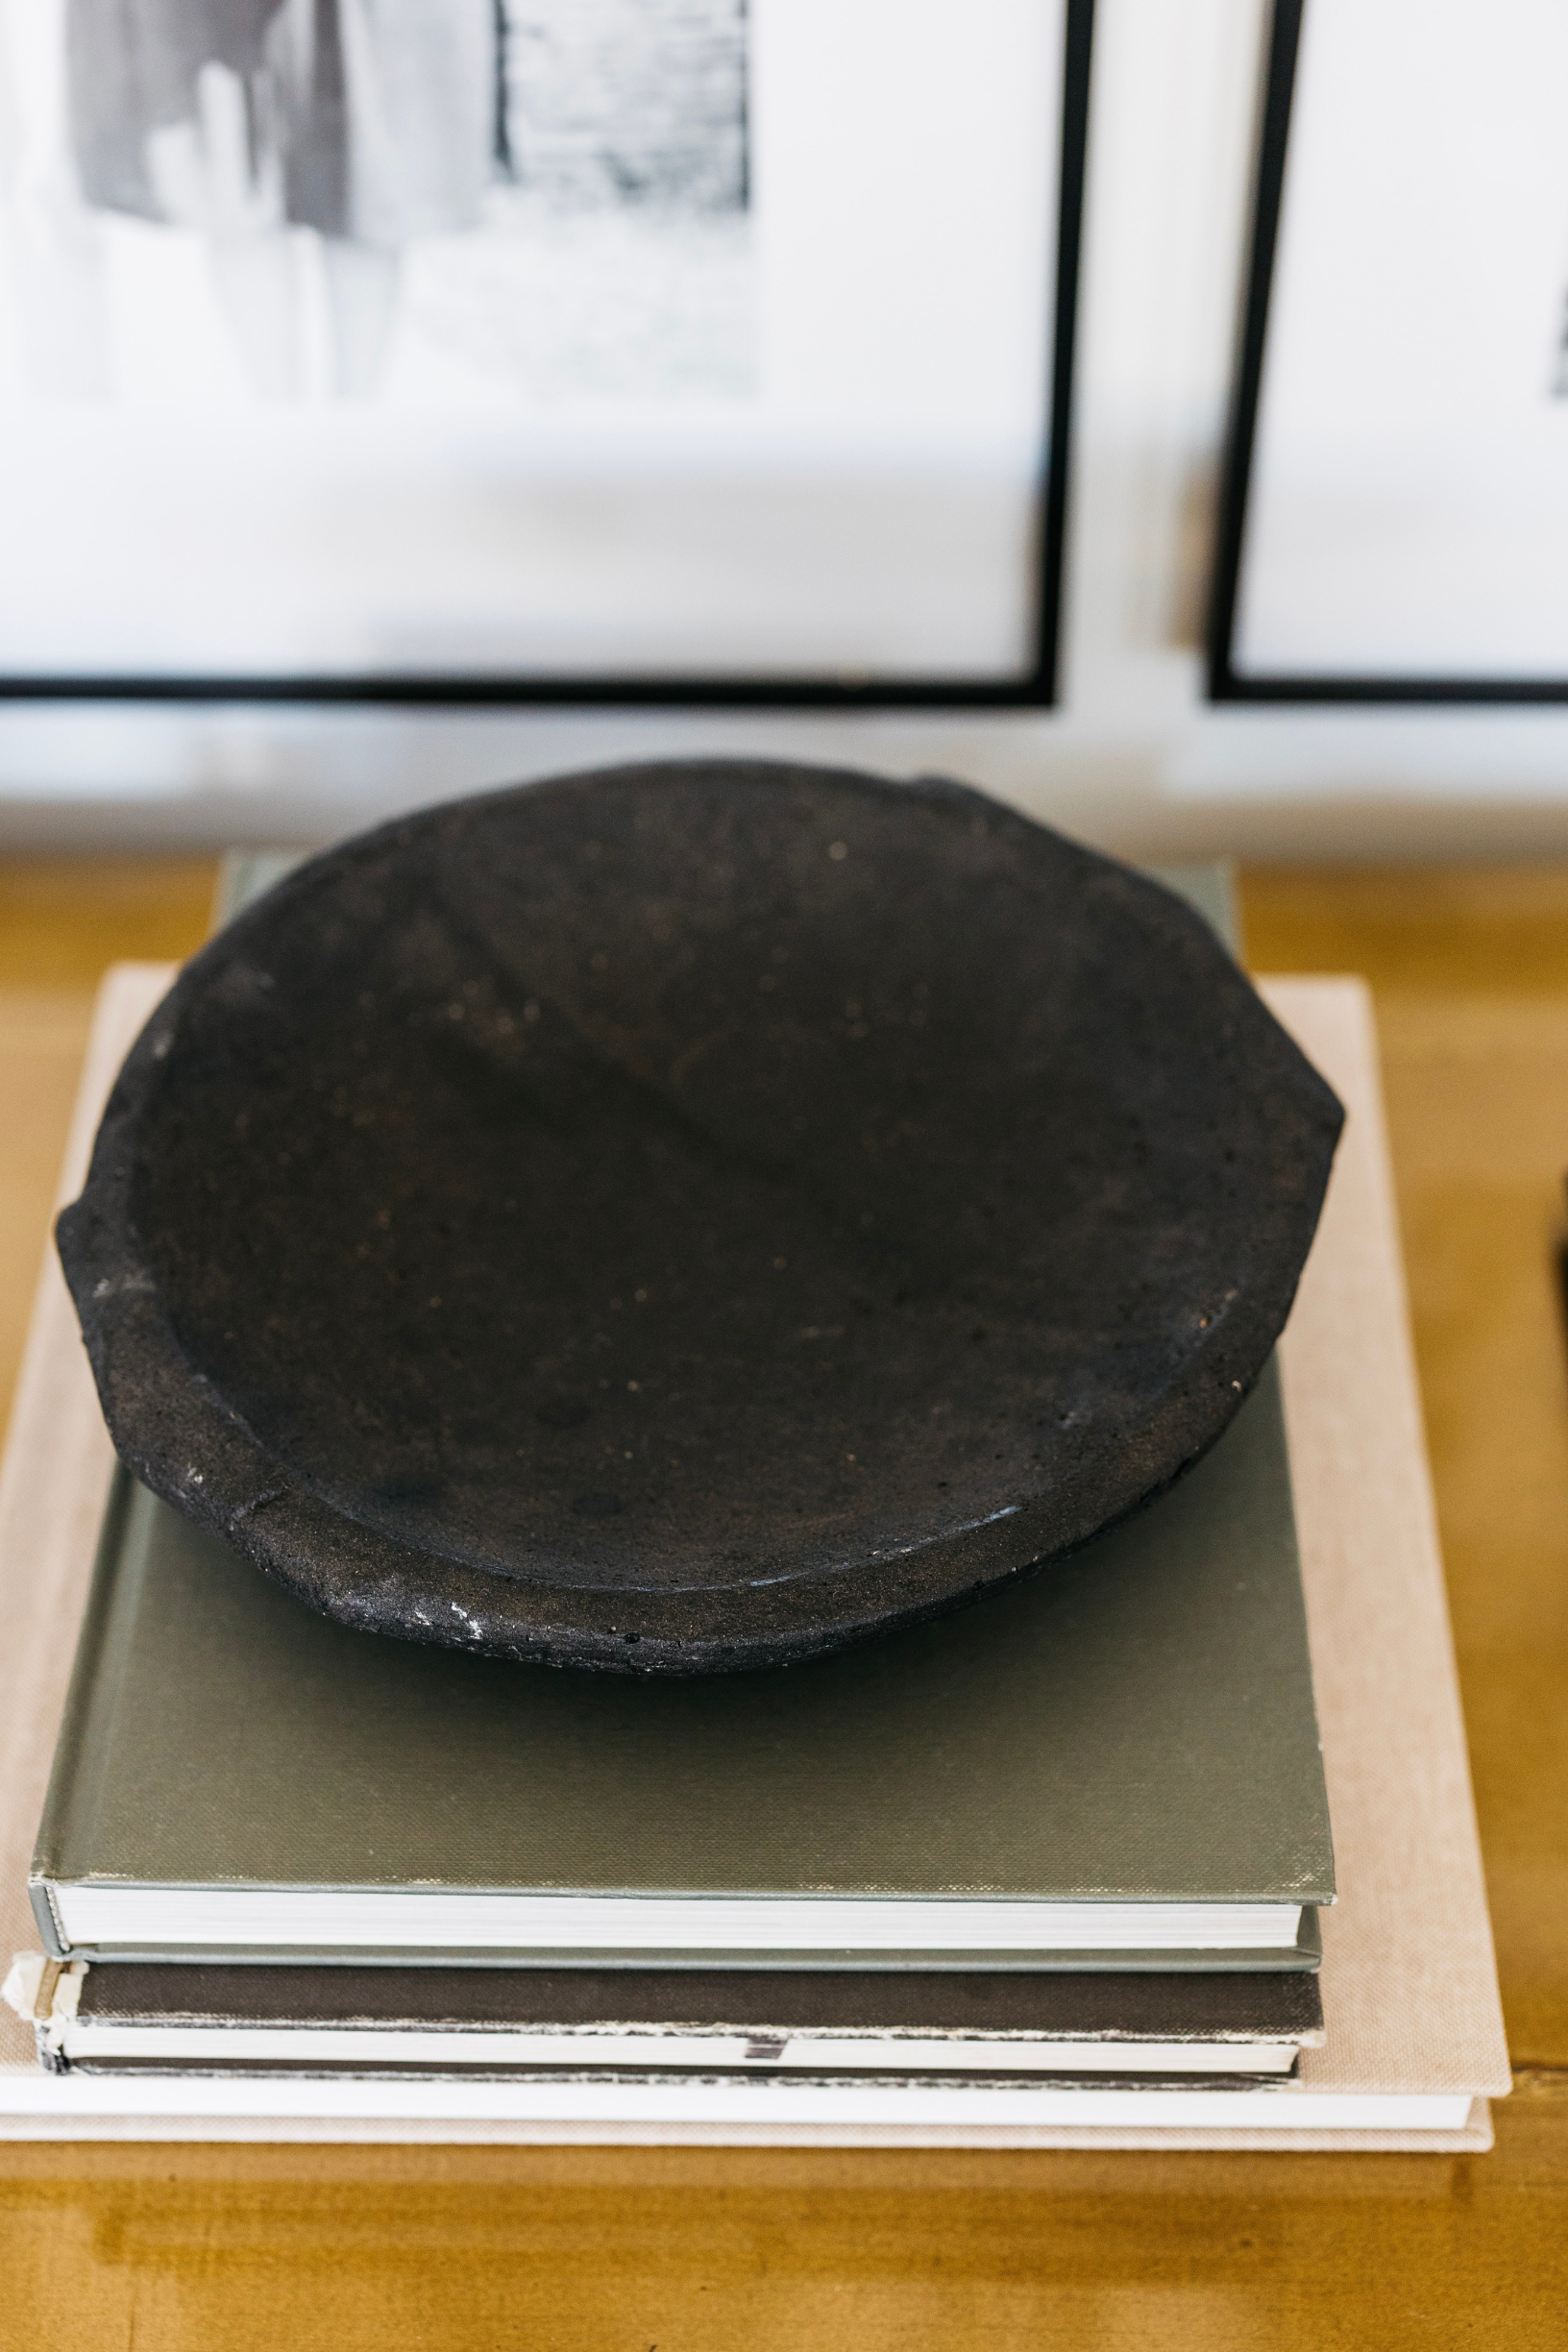 Leith Stone Saucer - Black